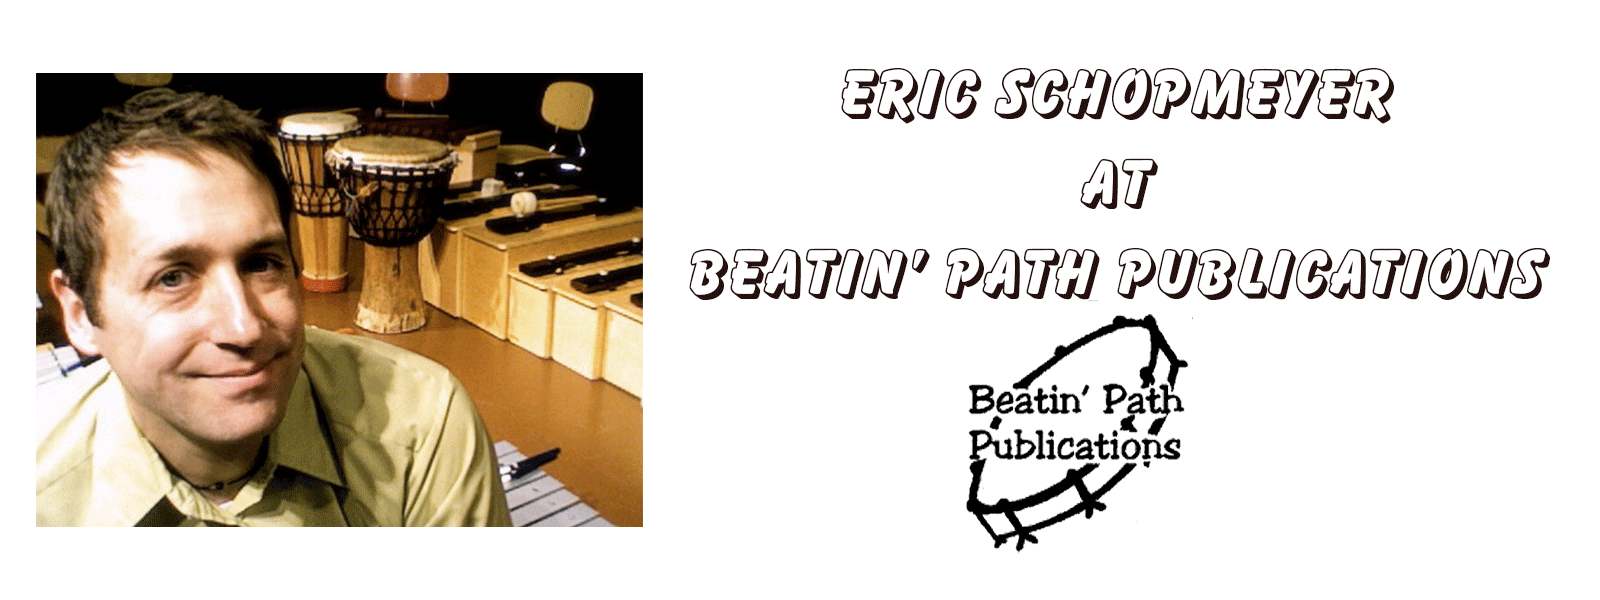 Eric Schopmeyer at Beatin' Path Publications